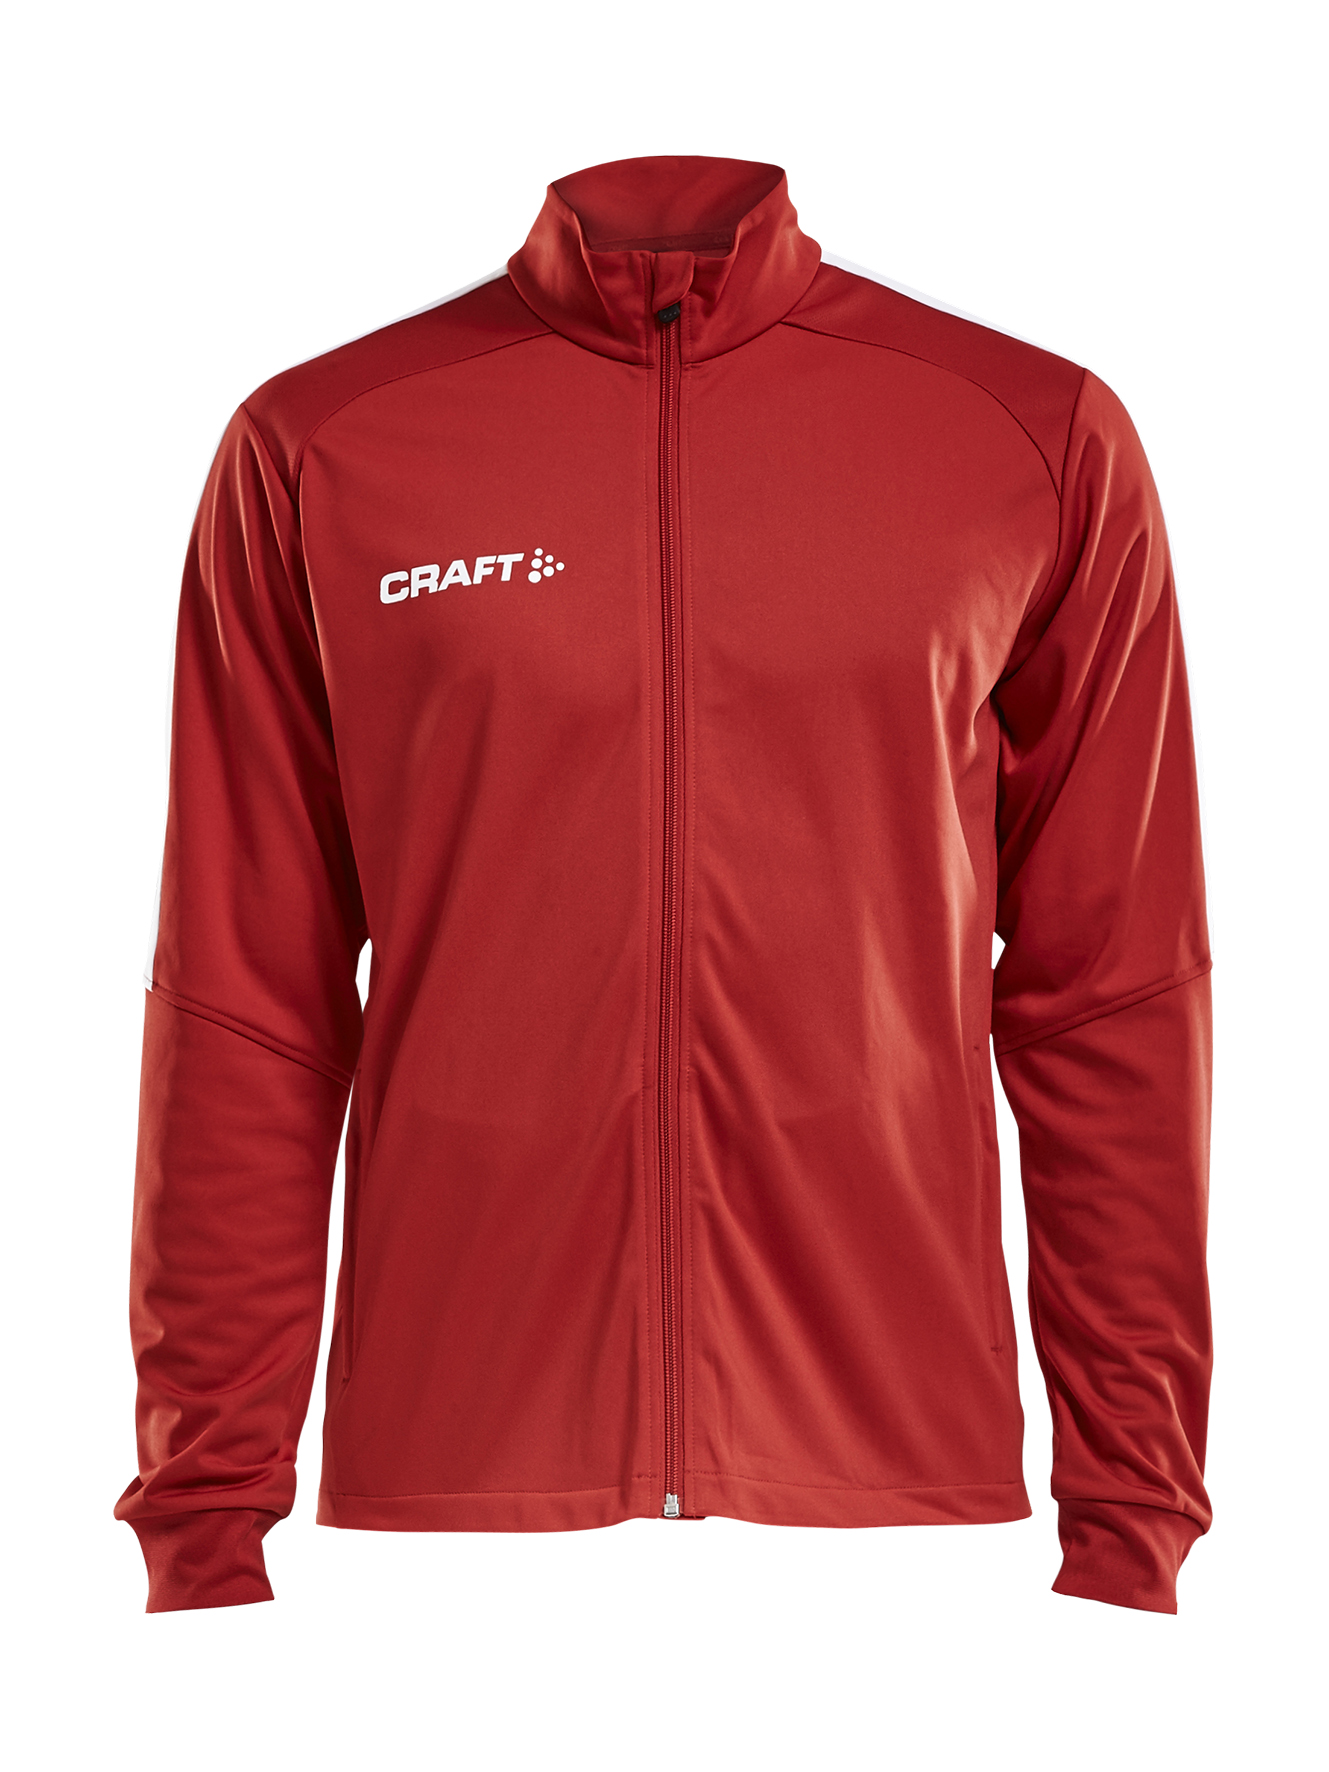 Craft PROGRESS Jacket Men BRIGHT RED/WHITE